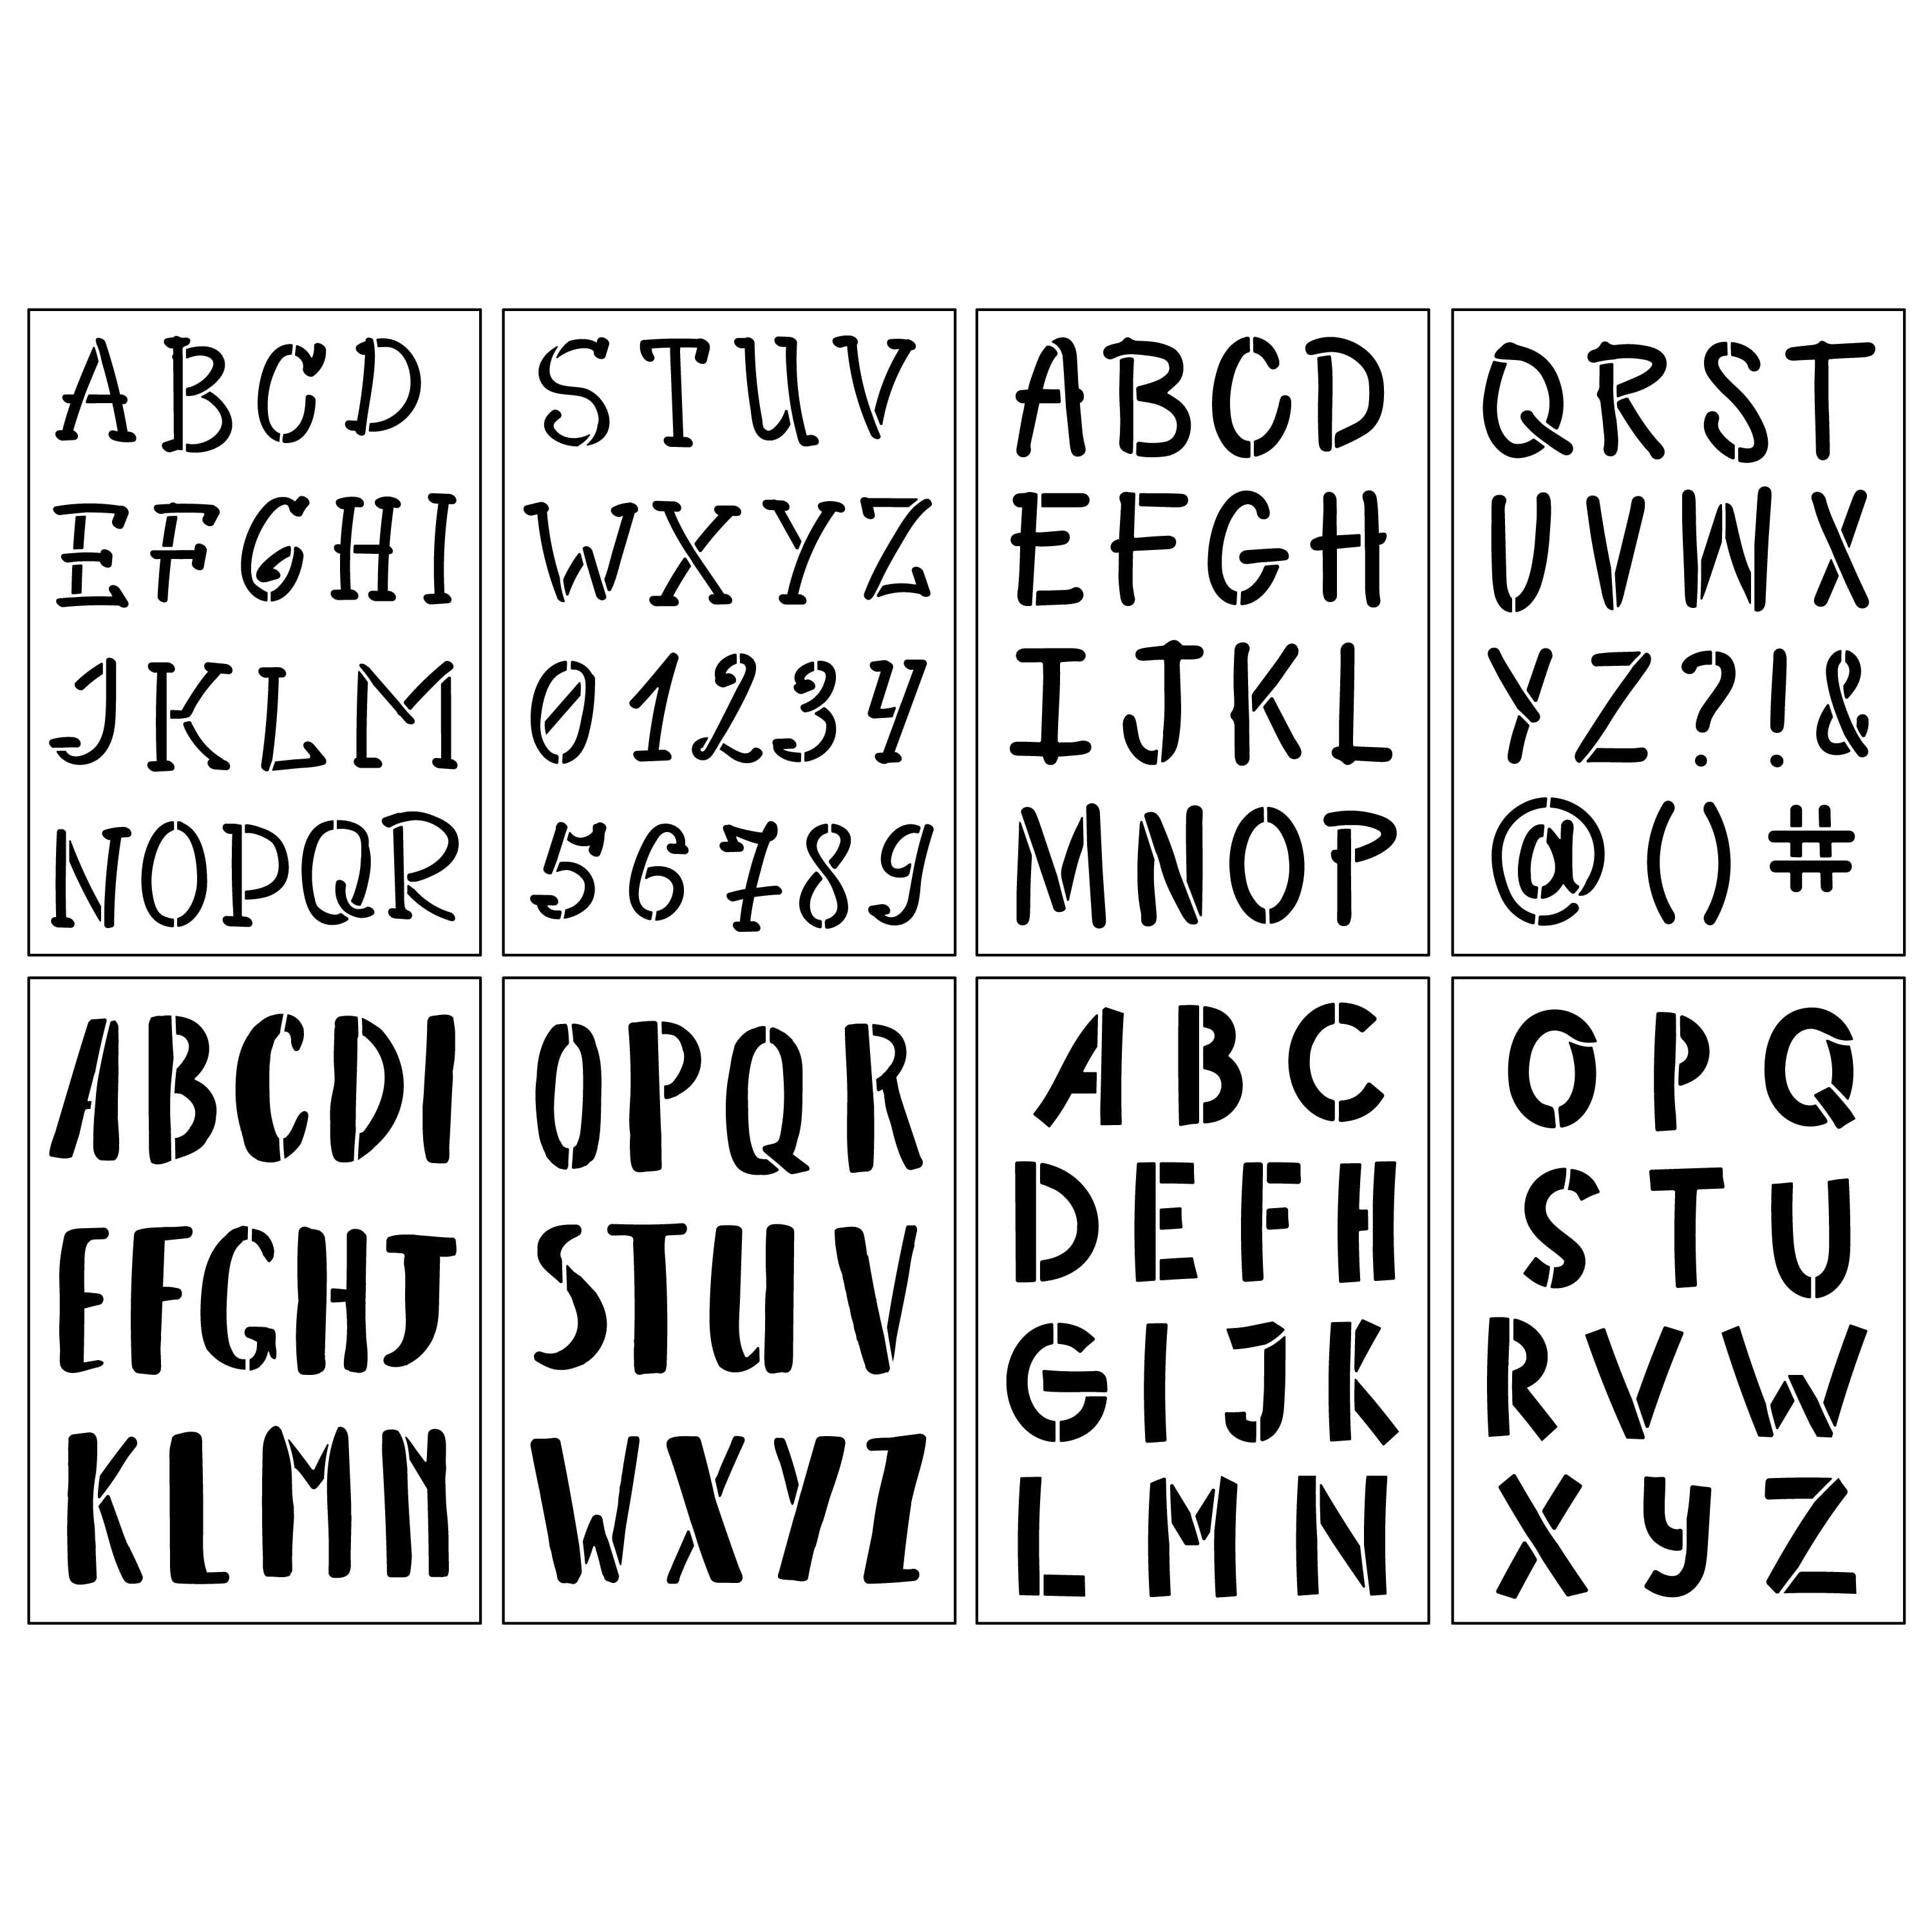 Alphabet Stencils - Type 4- Letter DIY Painting Stencils Kit - Number Stencils Large (24“H x 24”w)